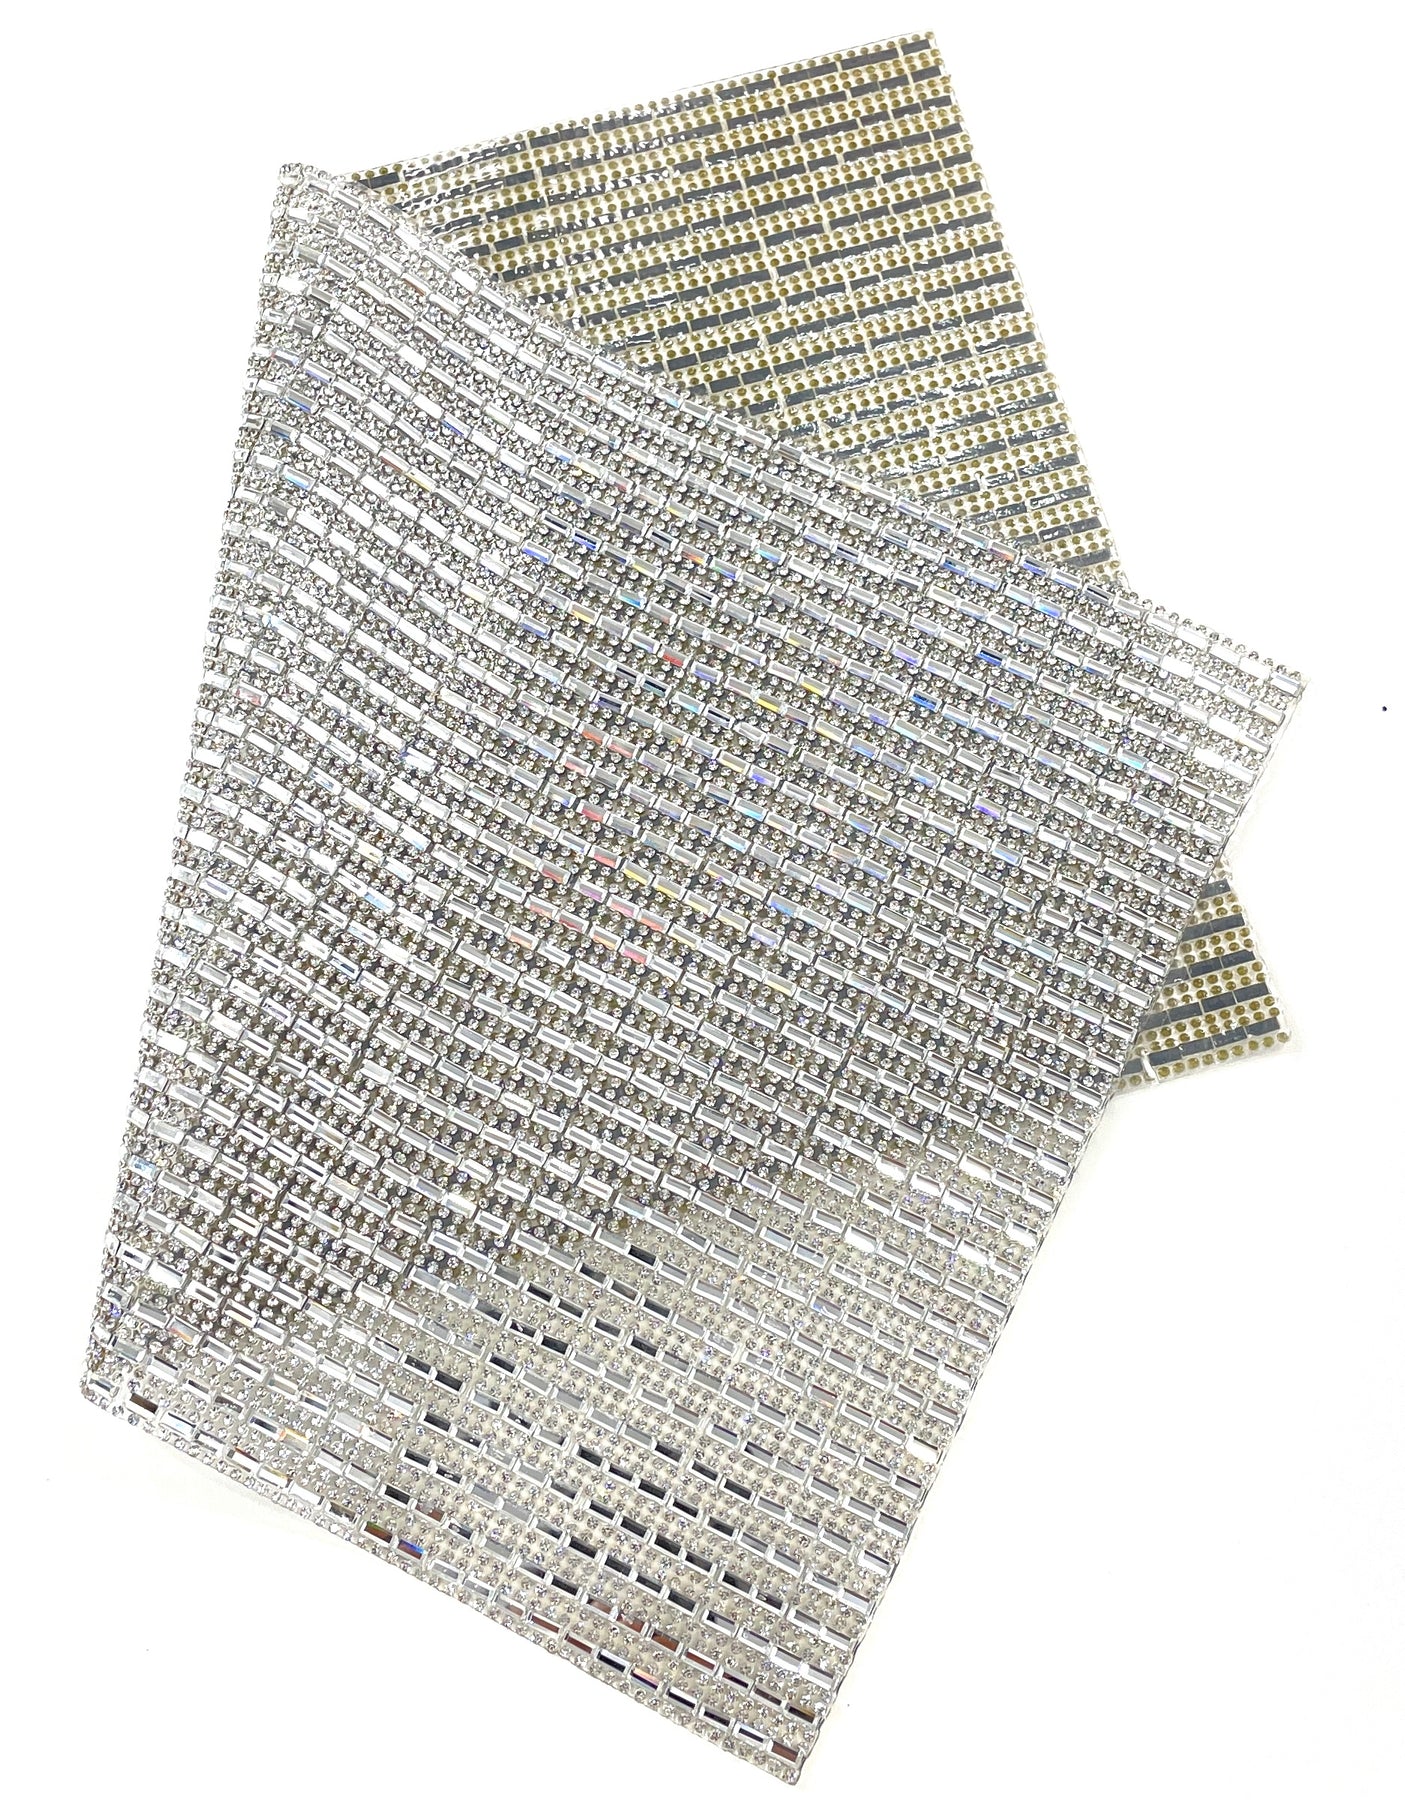 Crystal Hot-Fix Rhinestone Mesh Sheet Aluminum Metal Trim